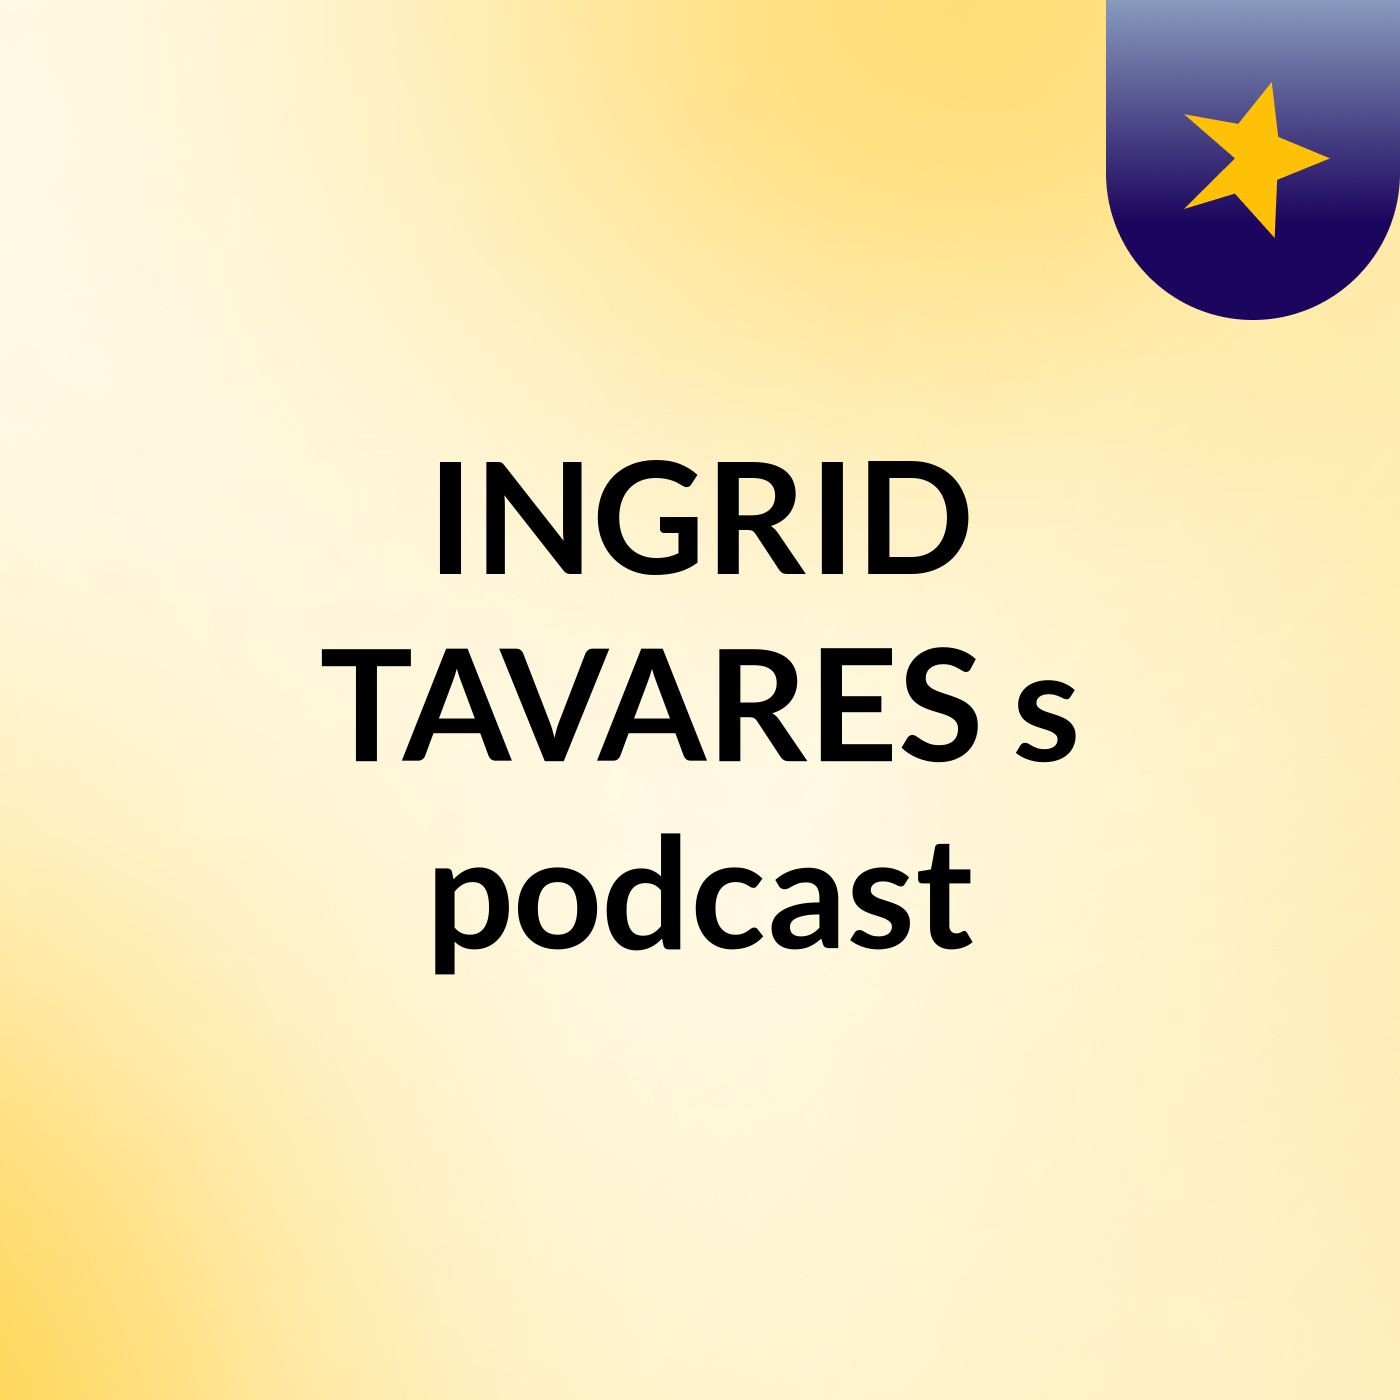 INGRID TAVARES's podcast